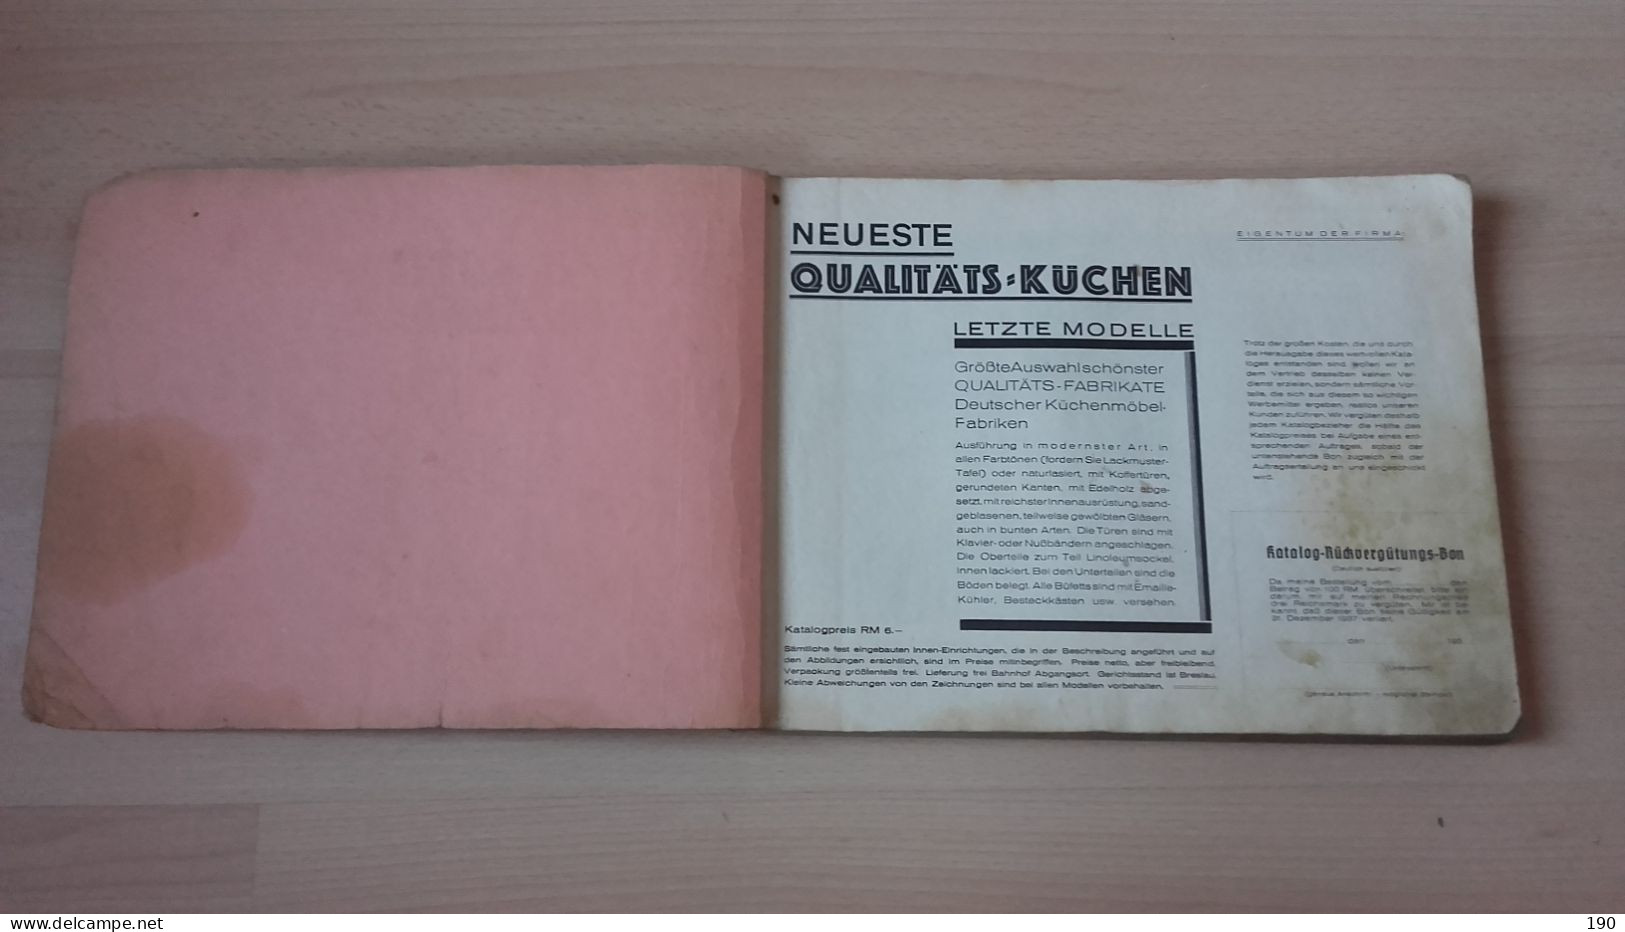 Carton Catalogue/catalog Of Furniture.Katalog Der Mobel.Besonders Schone Modelle Qualitats Kuchen - Libros Antiguos Y De Colección